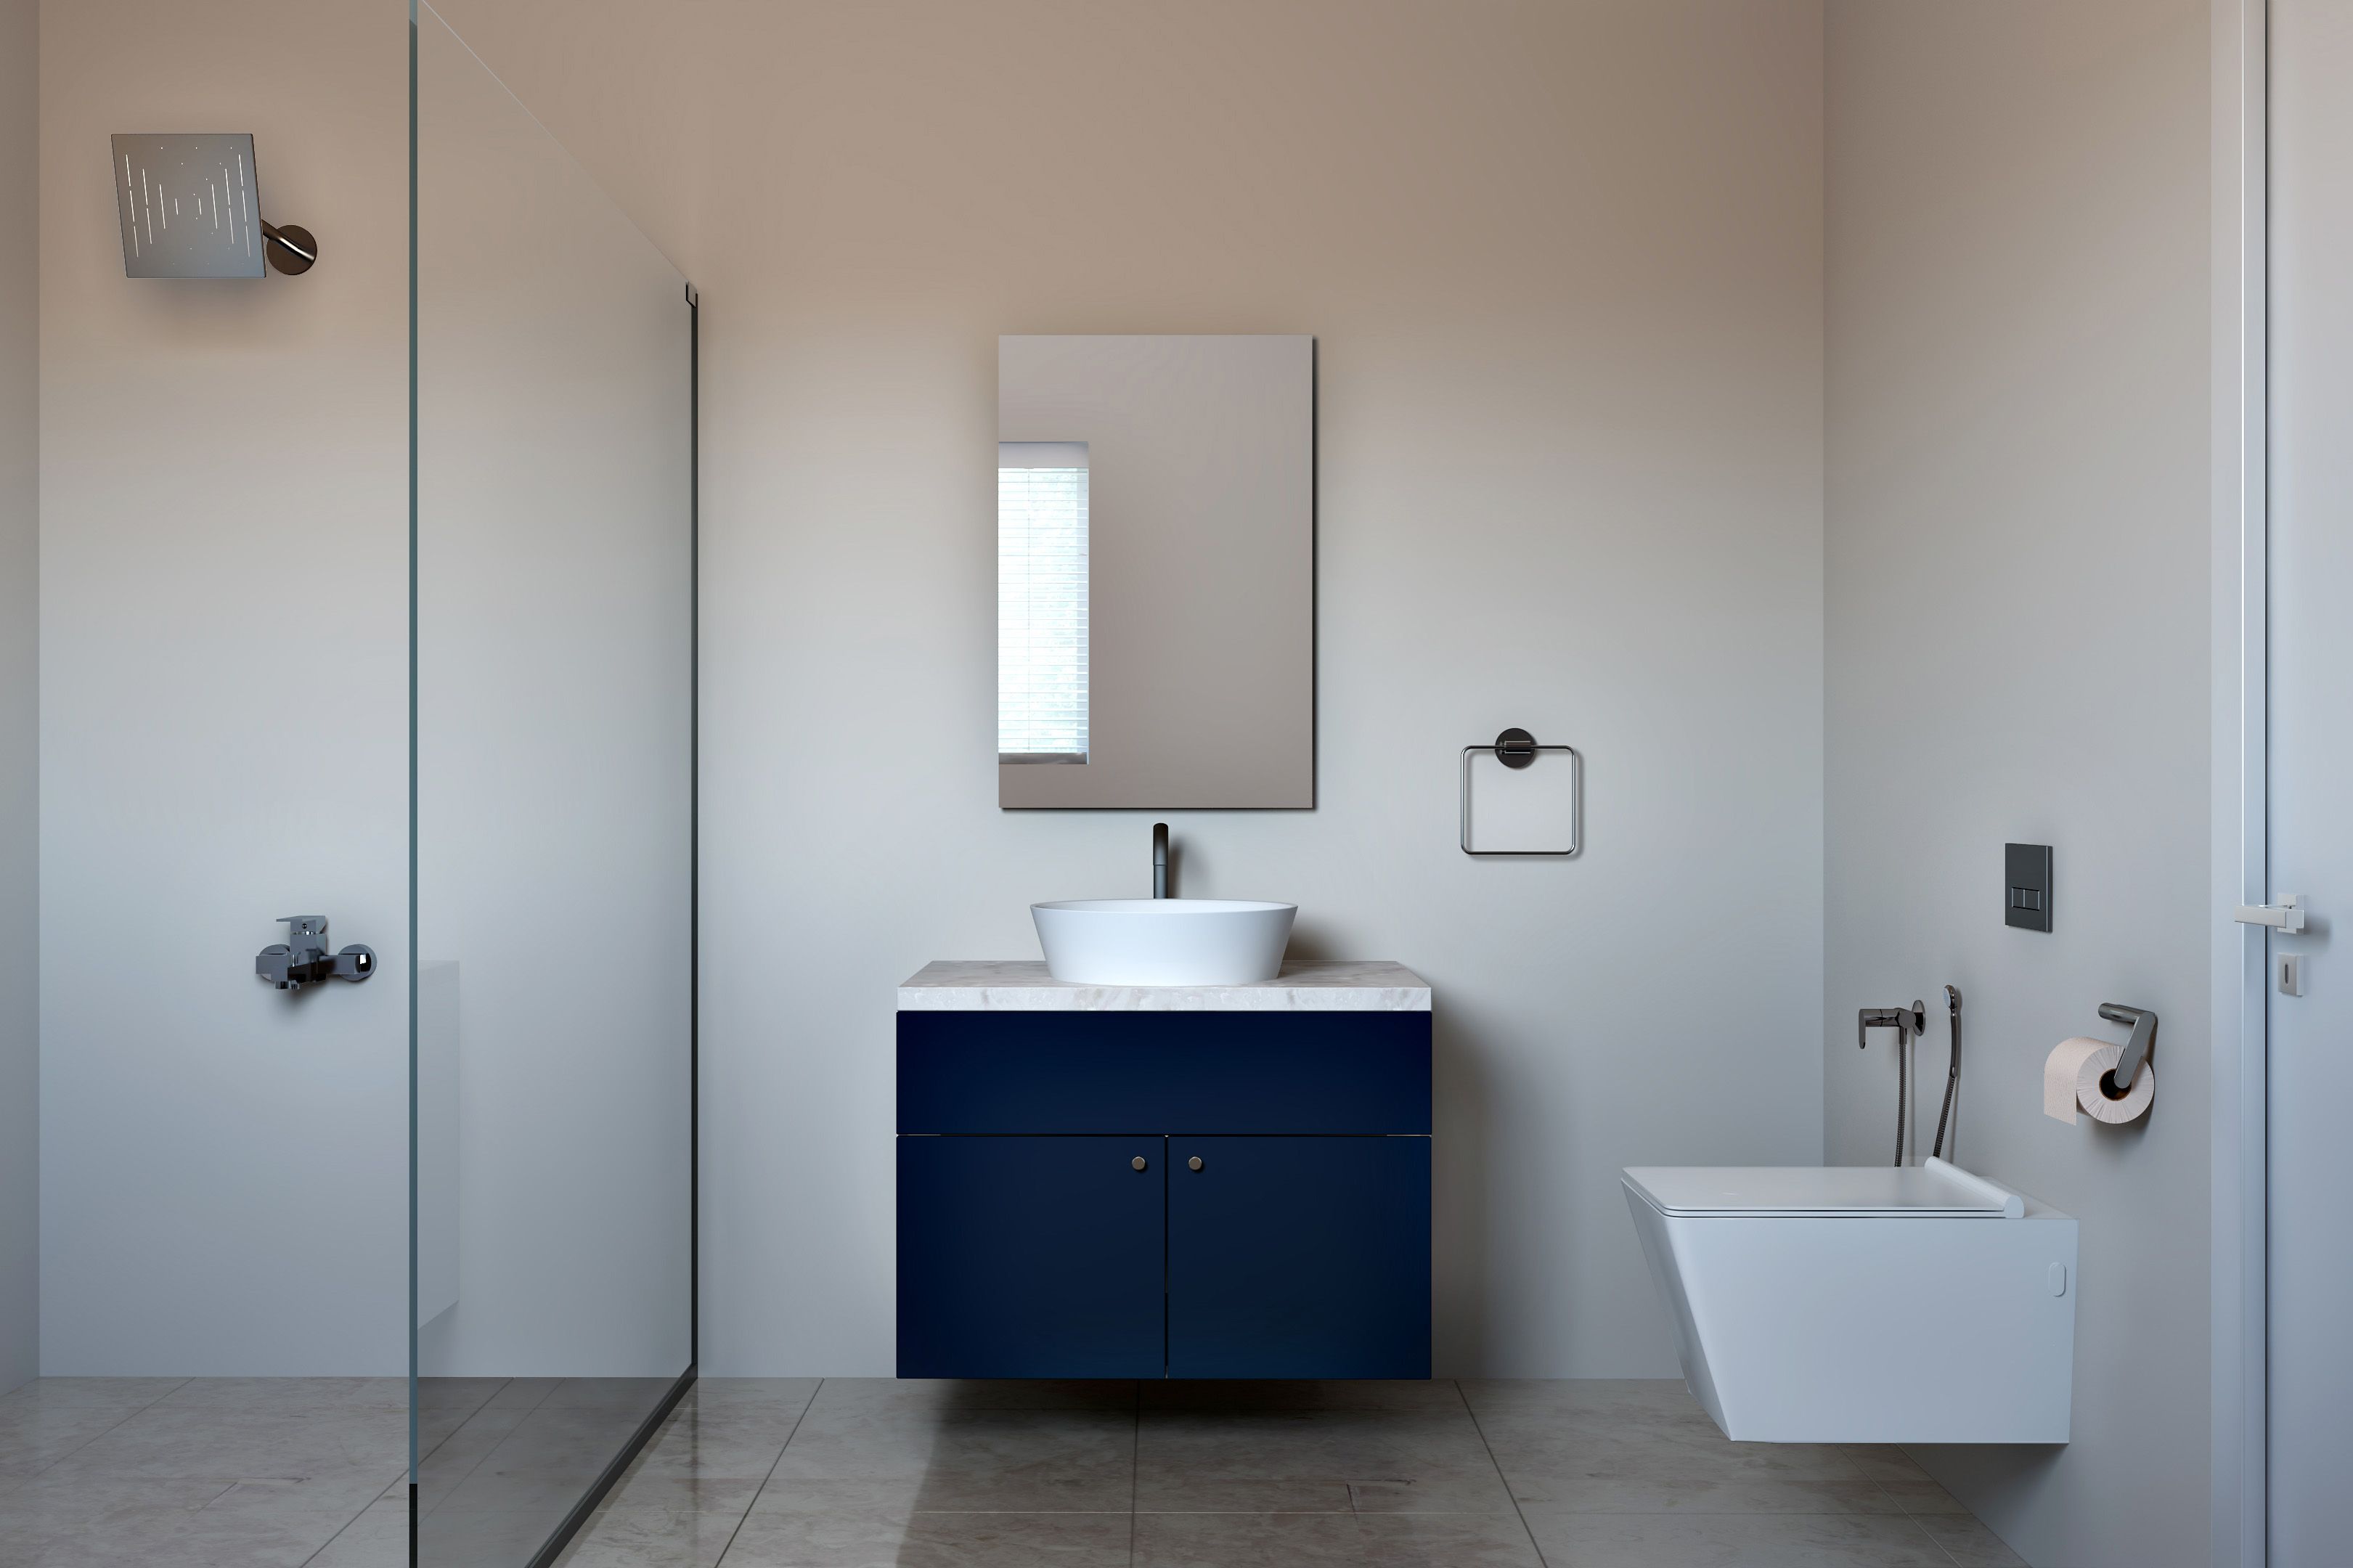 Ceramic Grey Bathroom Tile Design In Matte Finish